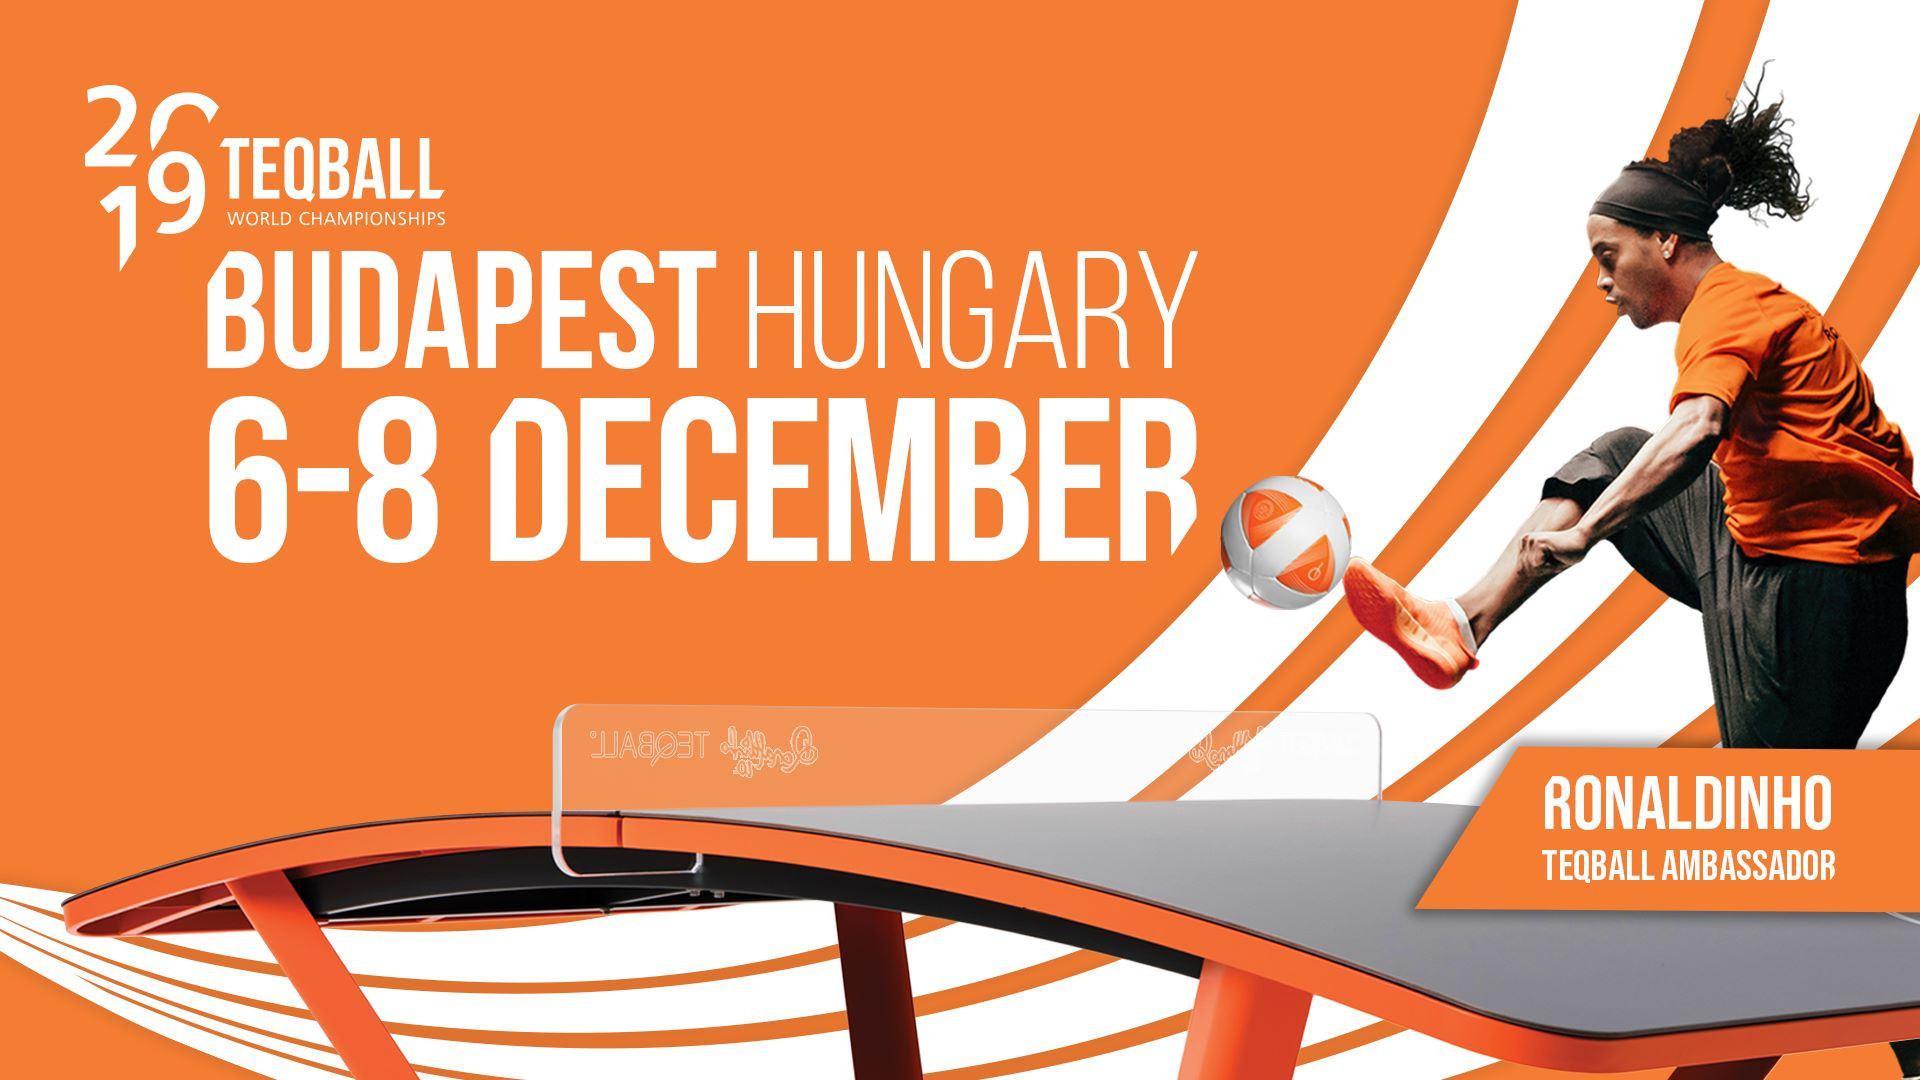 Budapest to host third Teqball World Championships next month